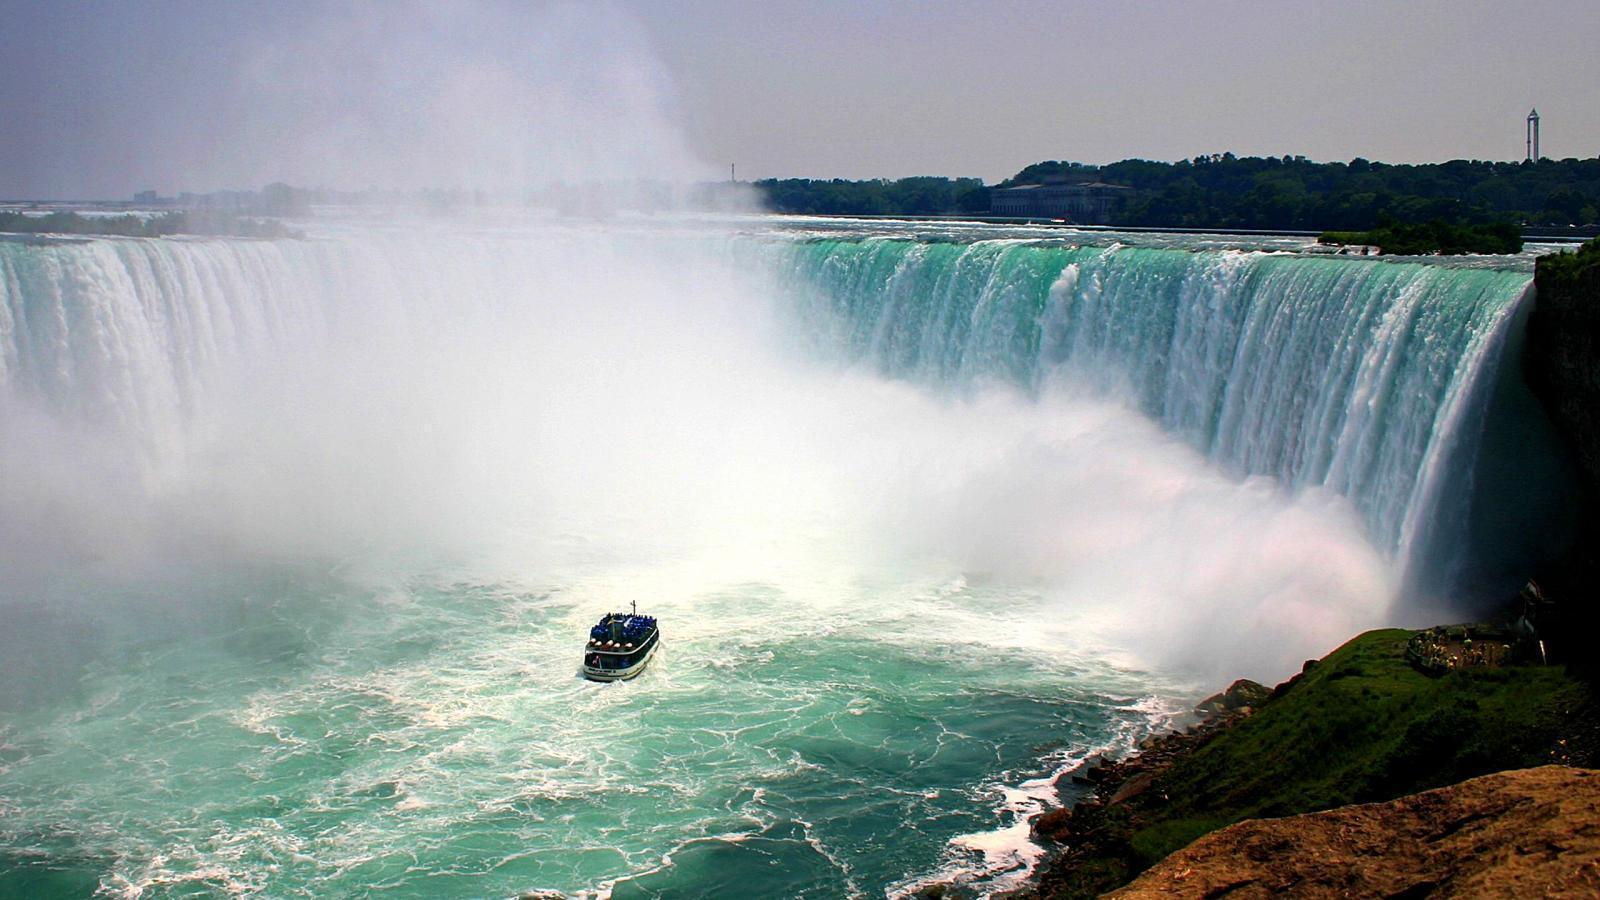 Hd Niagara Falls Wallpapers